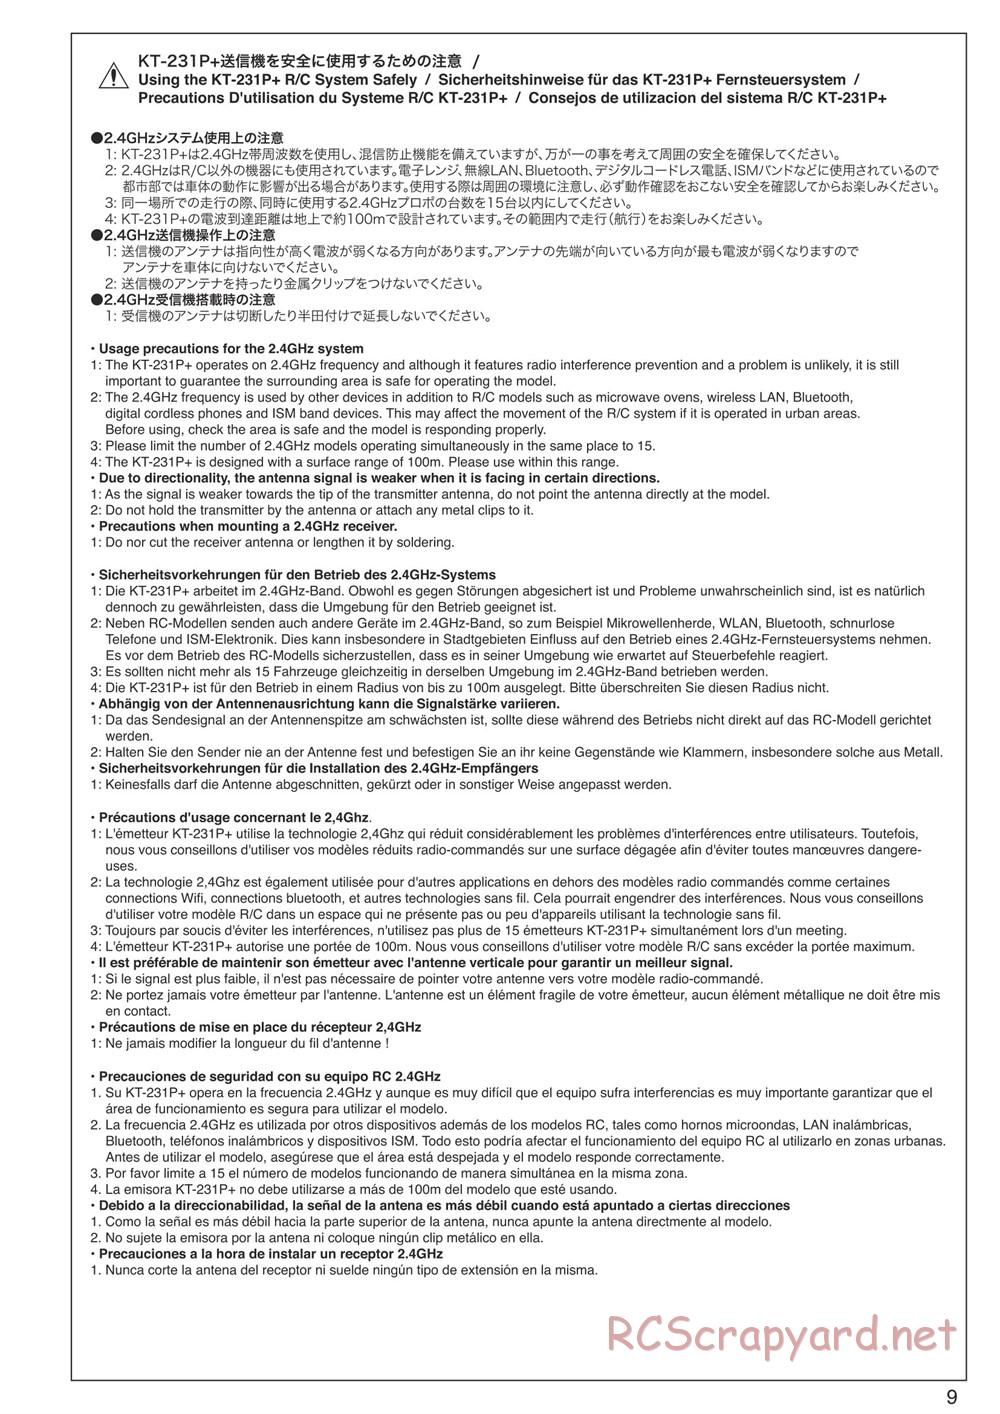 Kyosho - FO-XX 2.0 - Manual - Page 9